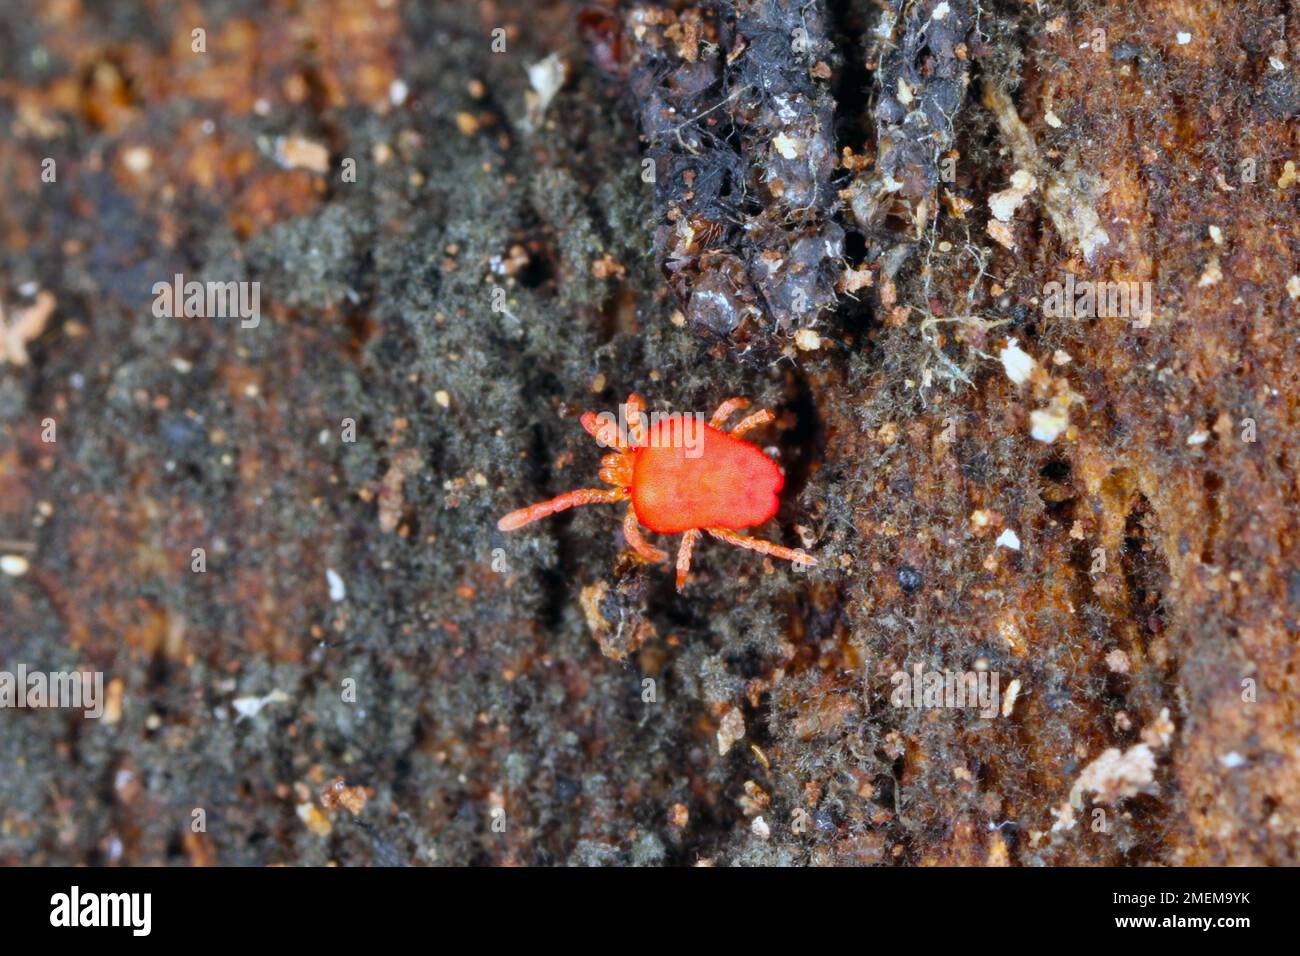 Red Velvet Mite or Rain Bug (Trombidiidae) walking on the ground. Stock Photo